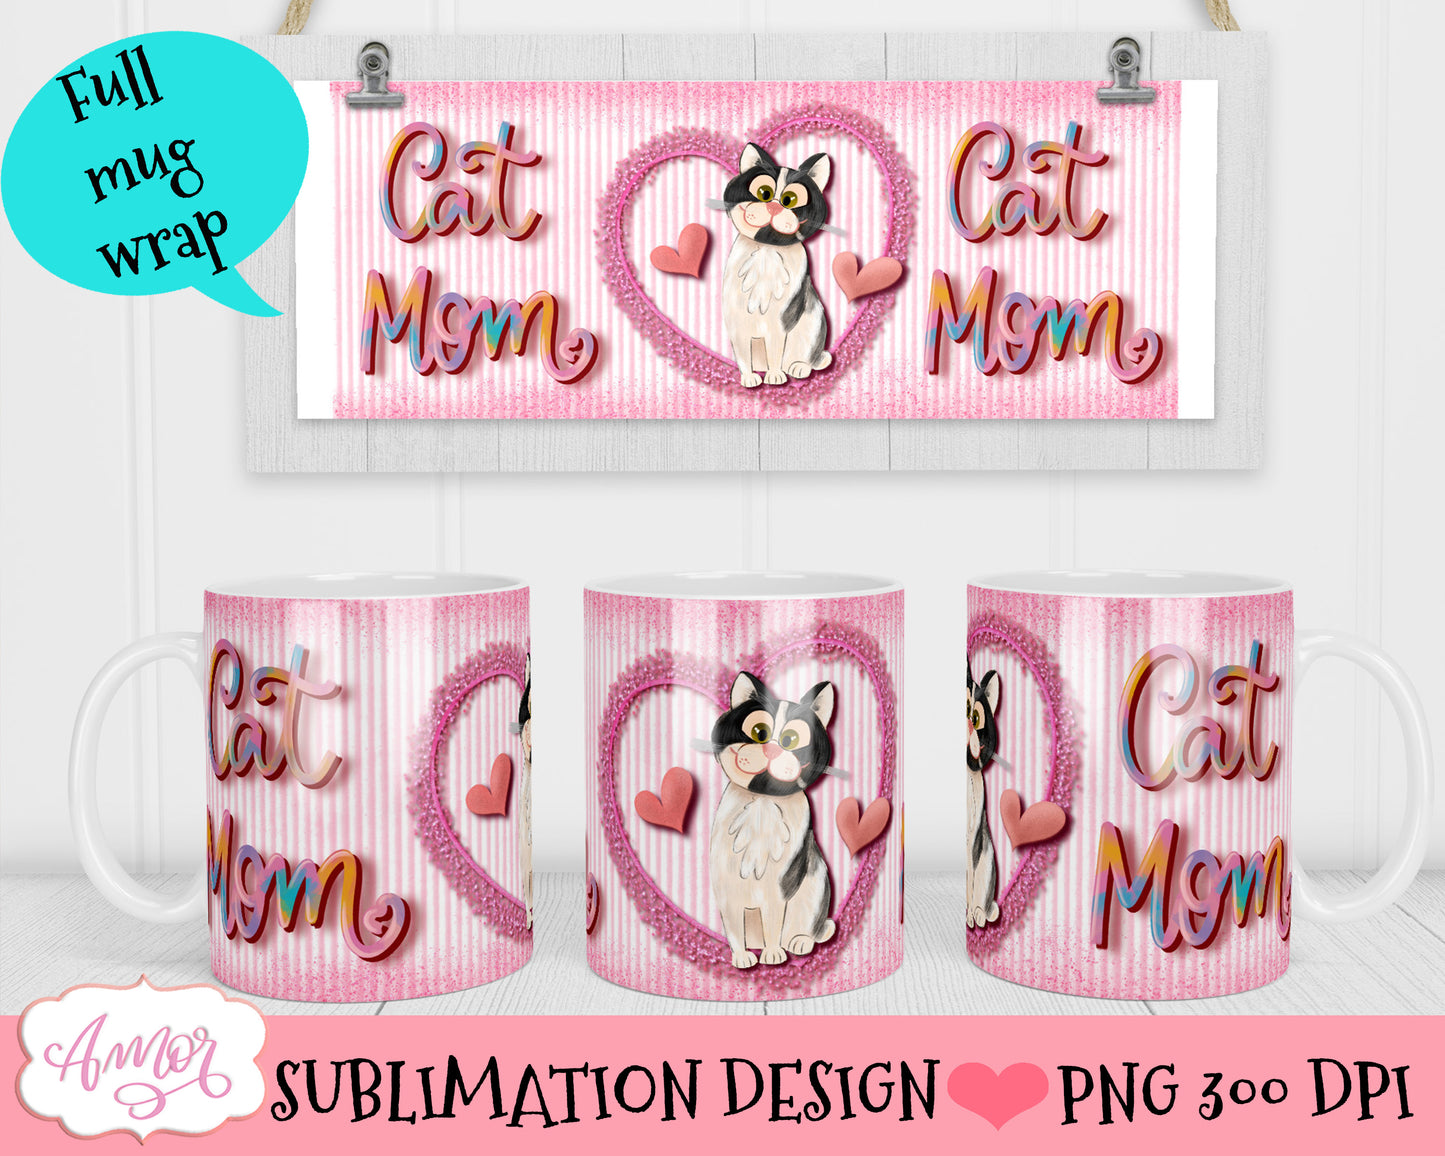 Cat mom mug wrap PNG for Sublimation